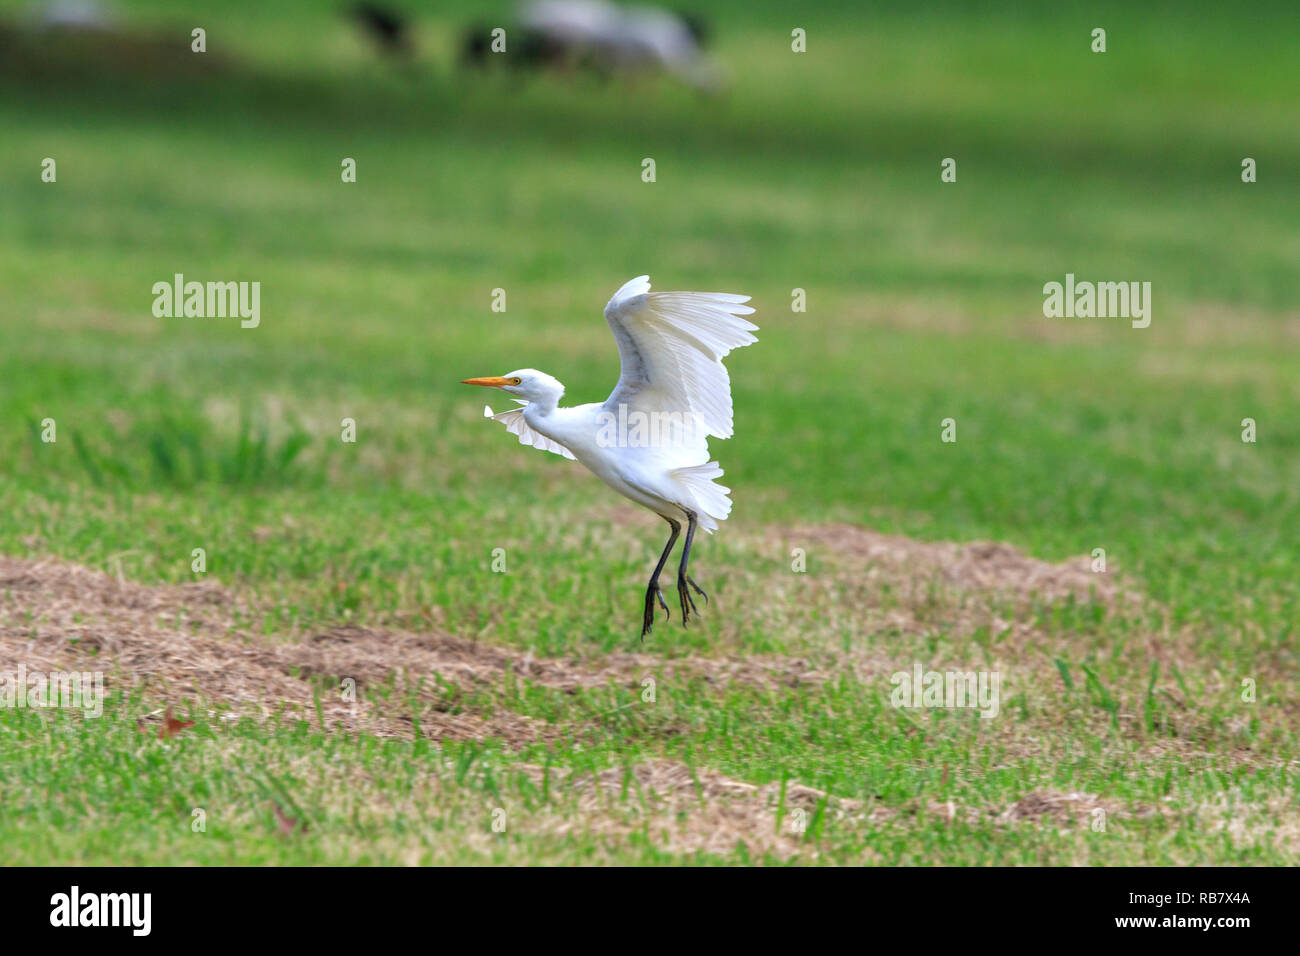 White egret (Ardea alba) landing on grass Stock Photo